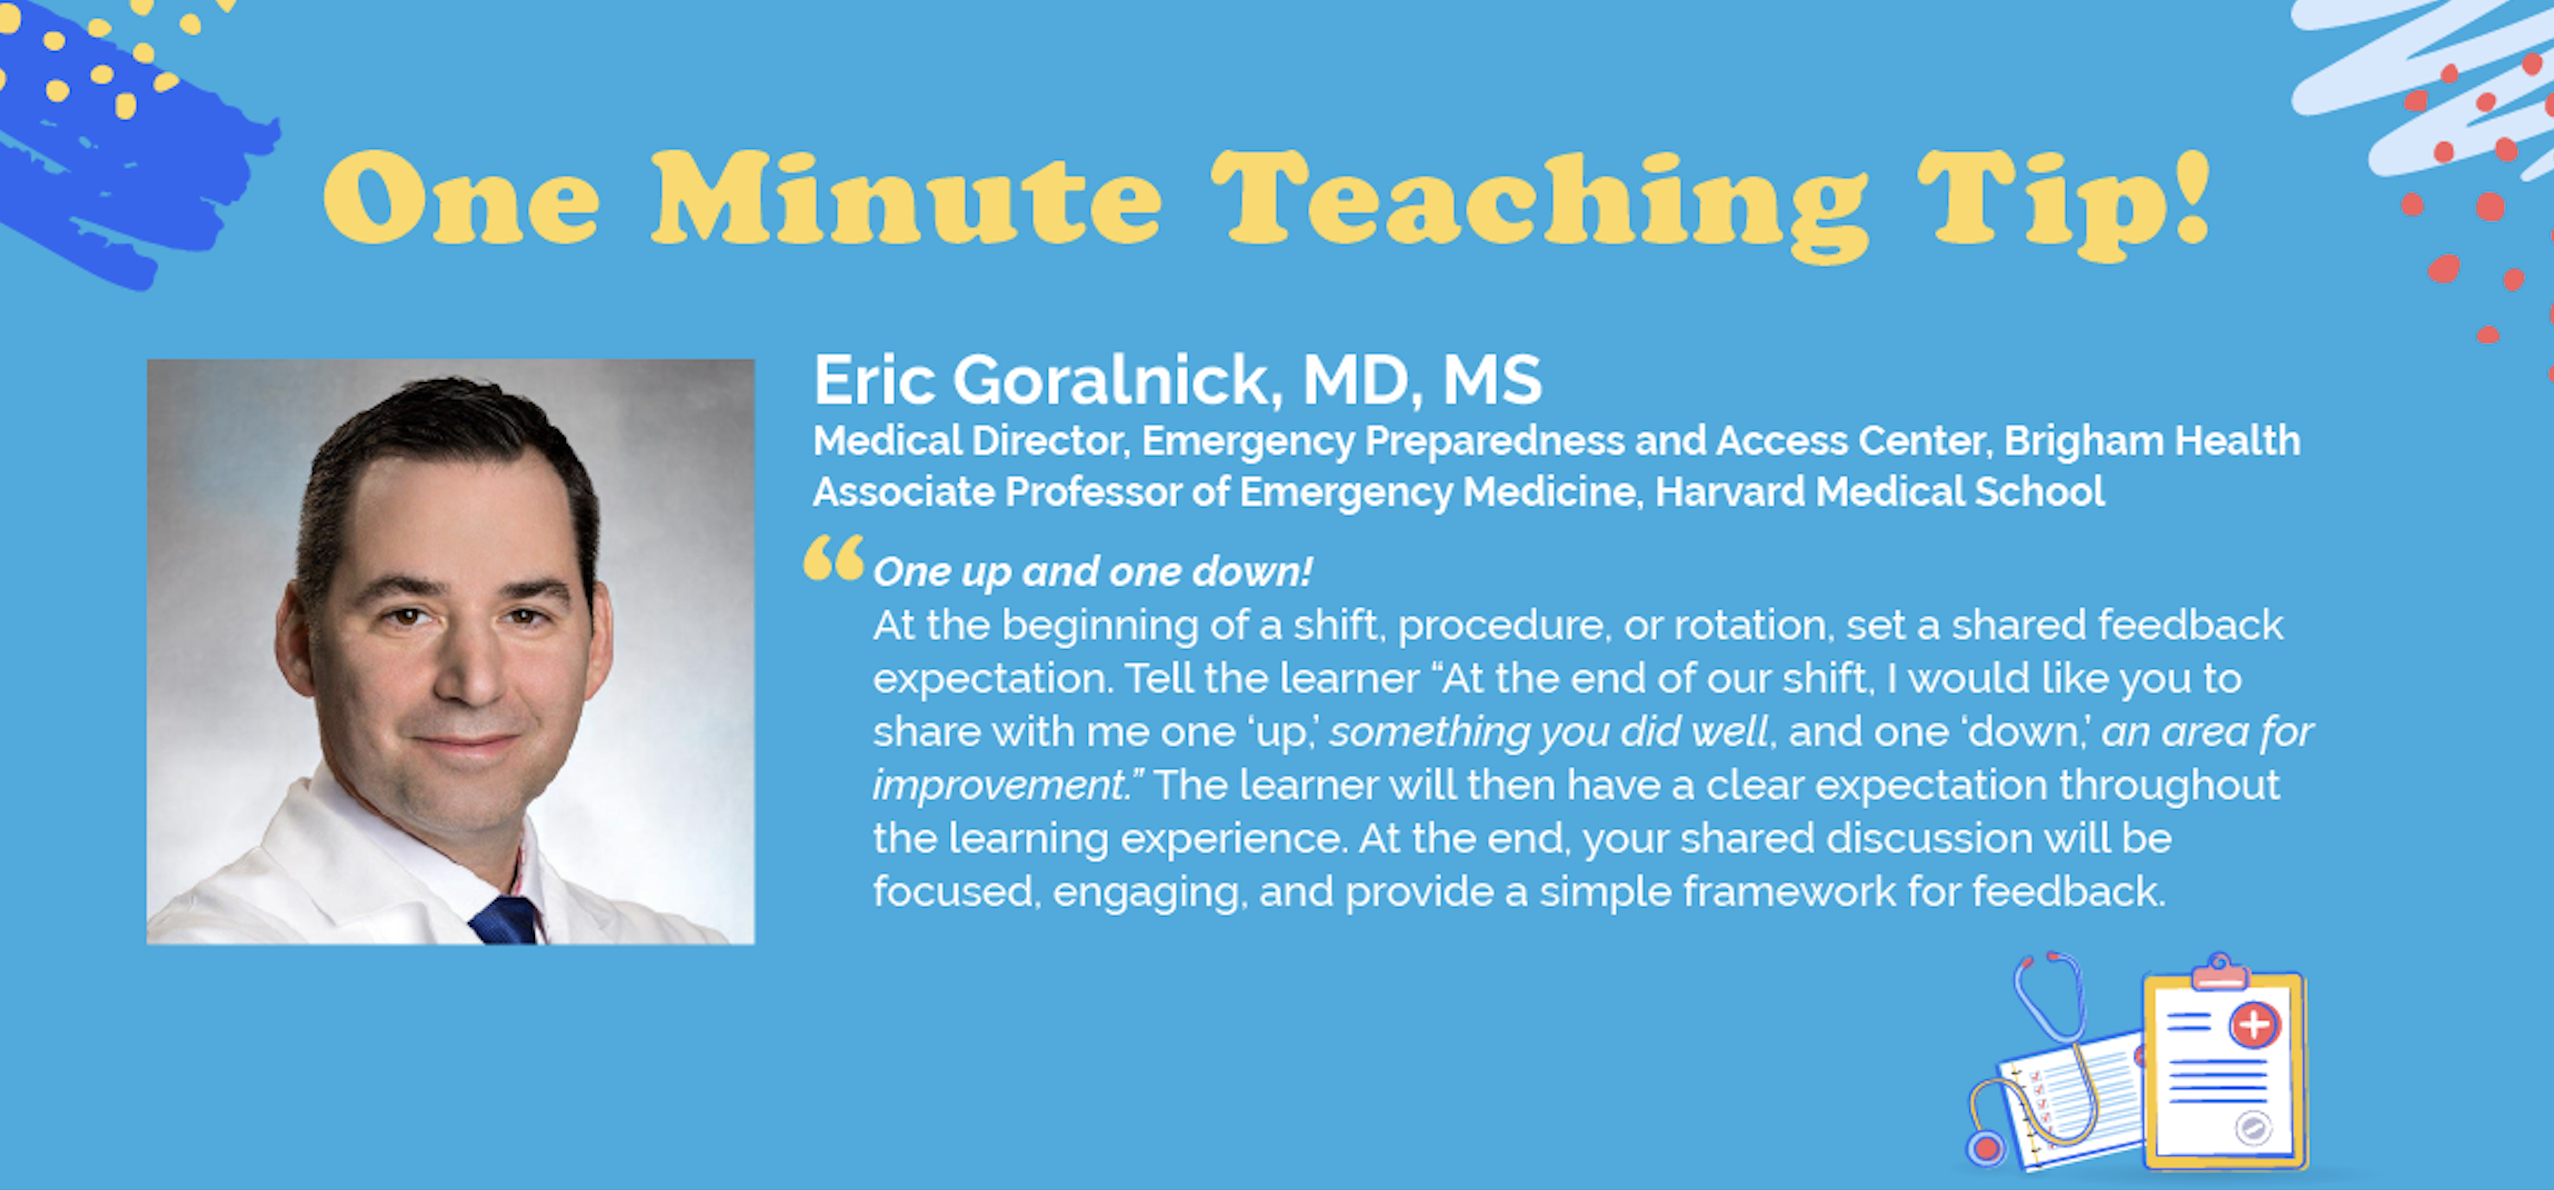 Eric Goralnick teach tip visual